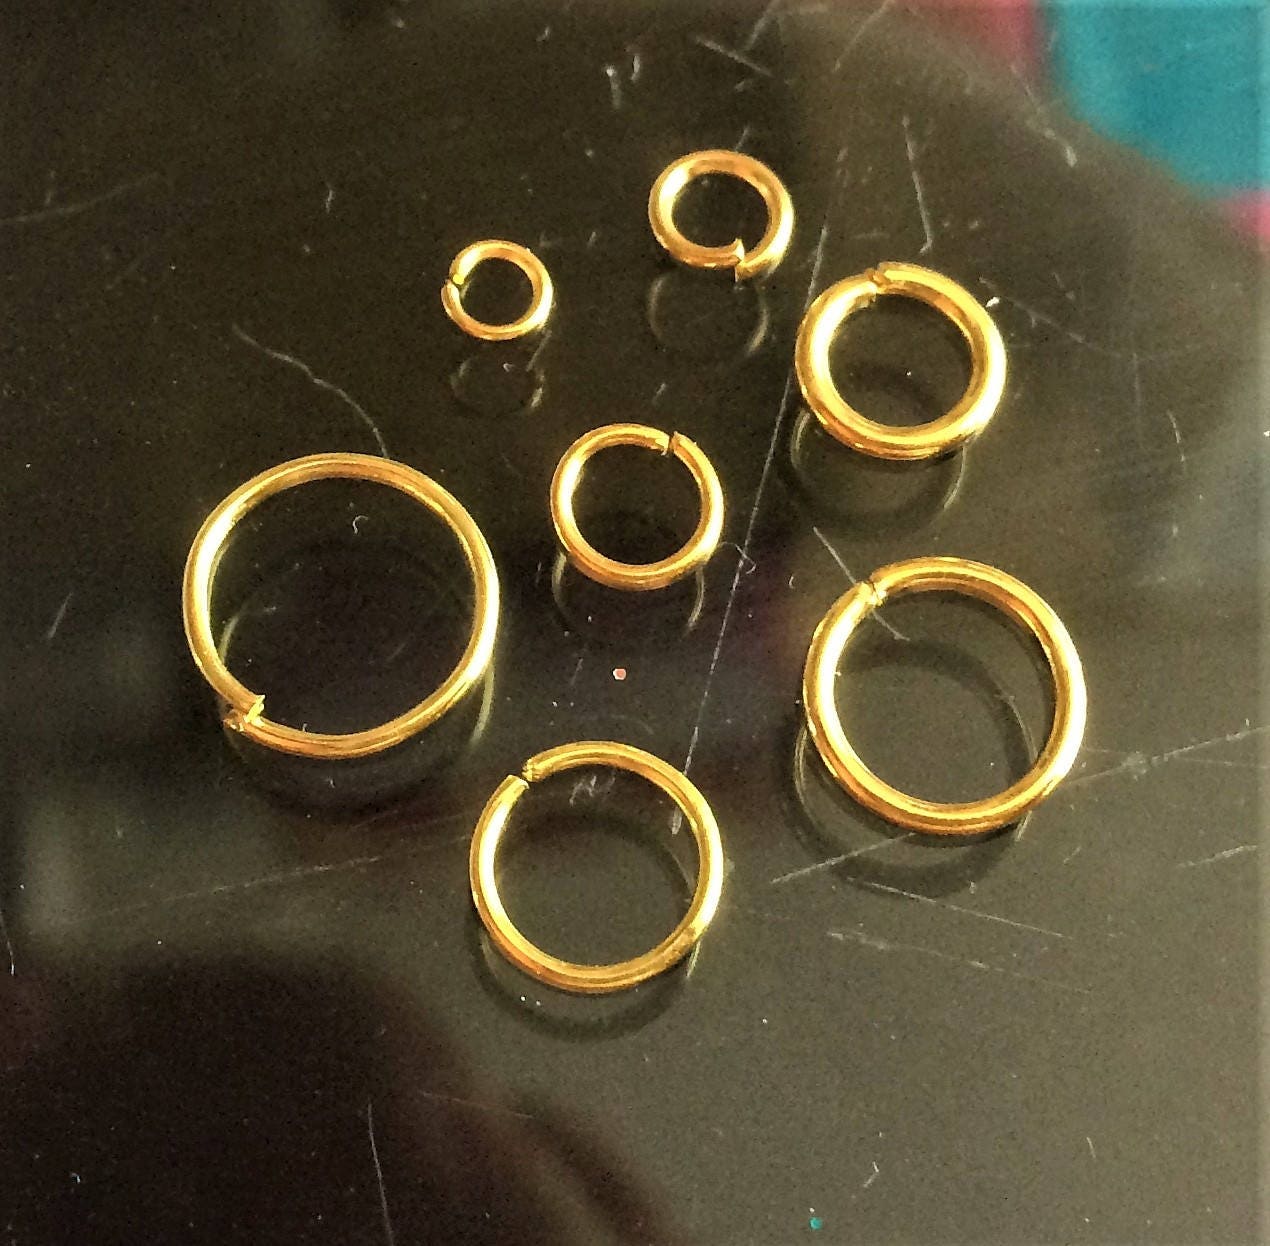  D-FLIFE Jump Rings for Jewelry Making Kit, 1200 pcs